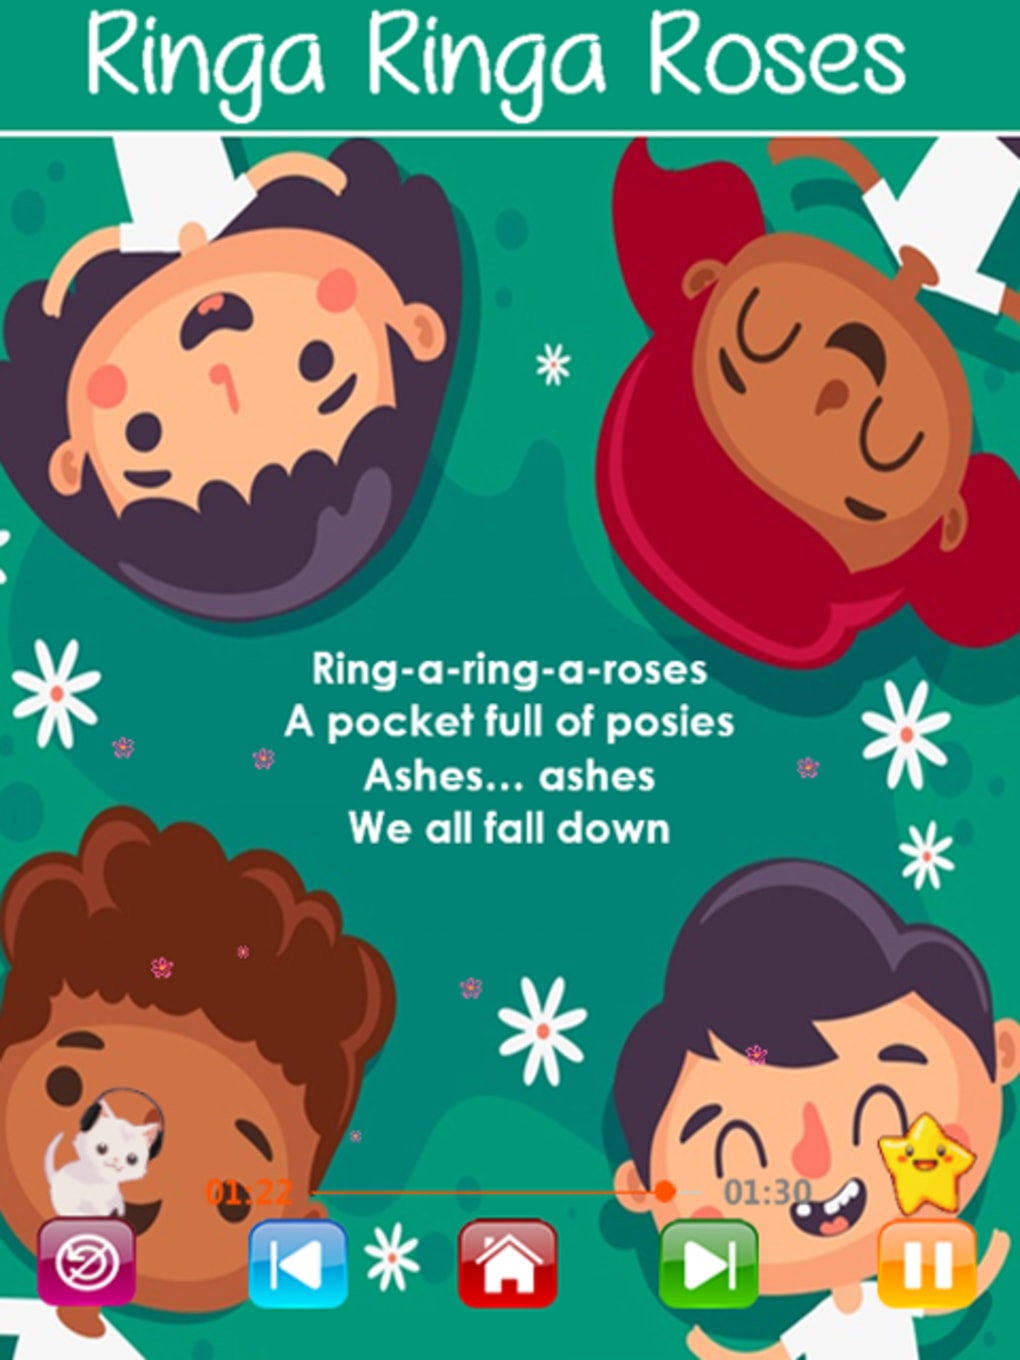 Ringa Ringa Roses - English Nursery Rhyme for Kids and Childrens - YouTube